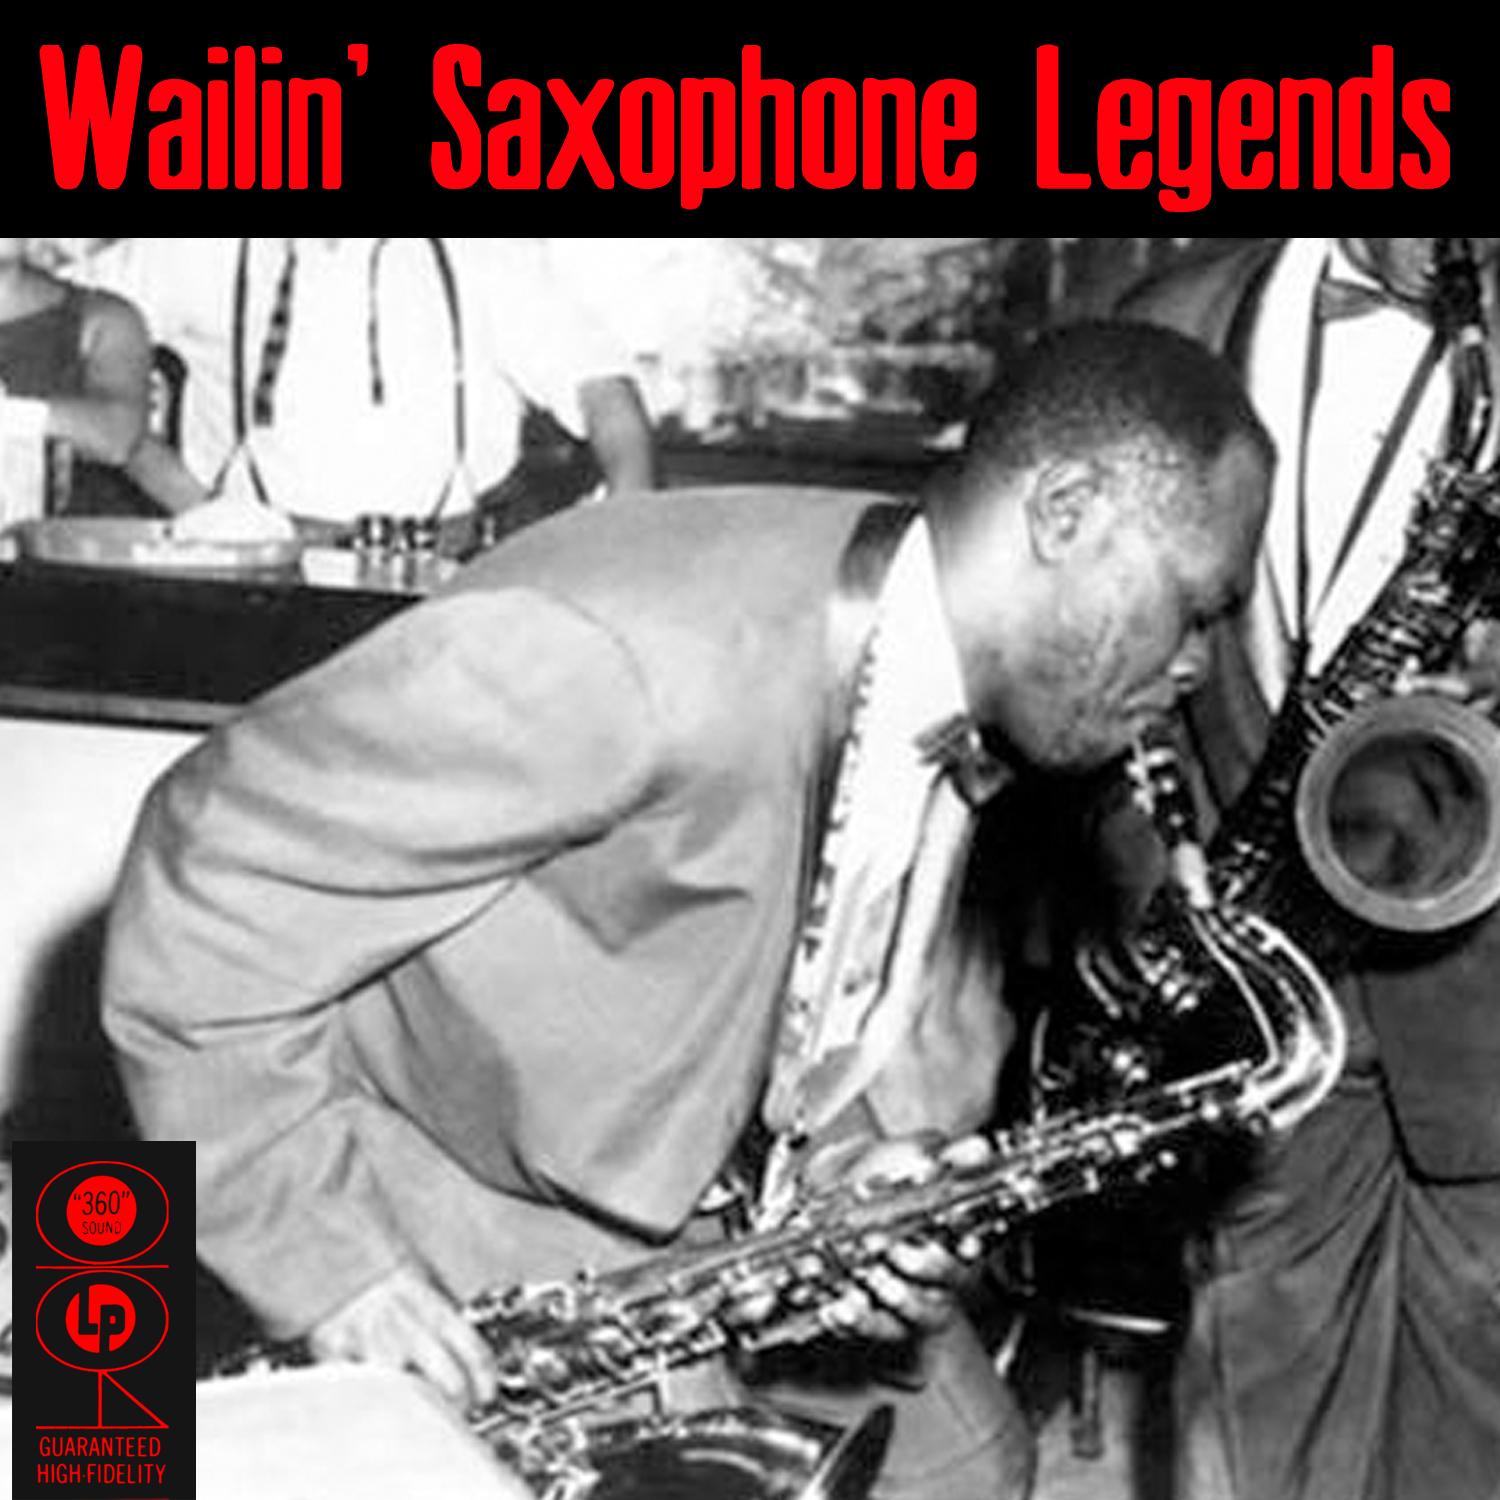 Wailin' Saxophone Legends